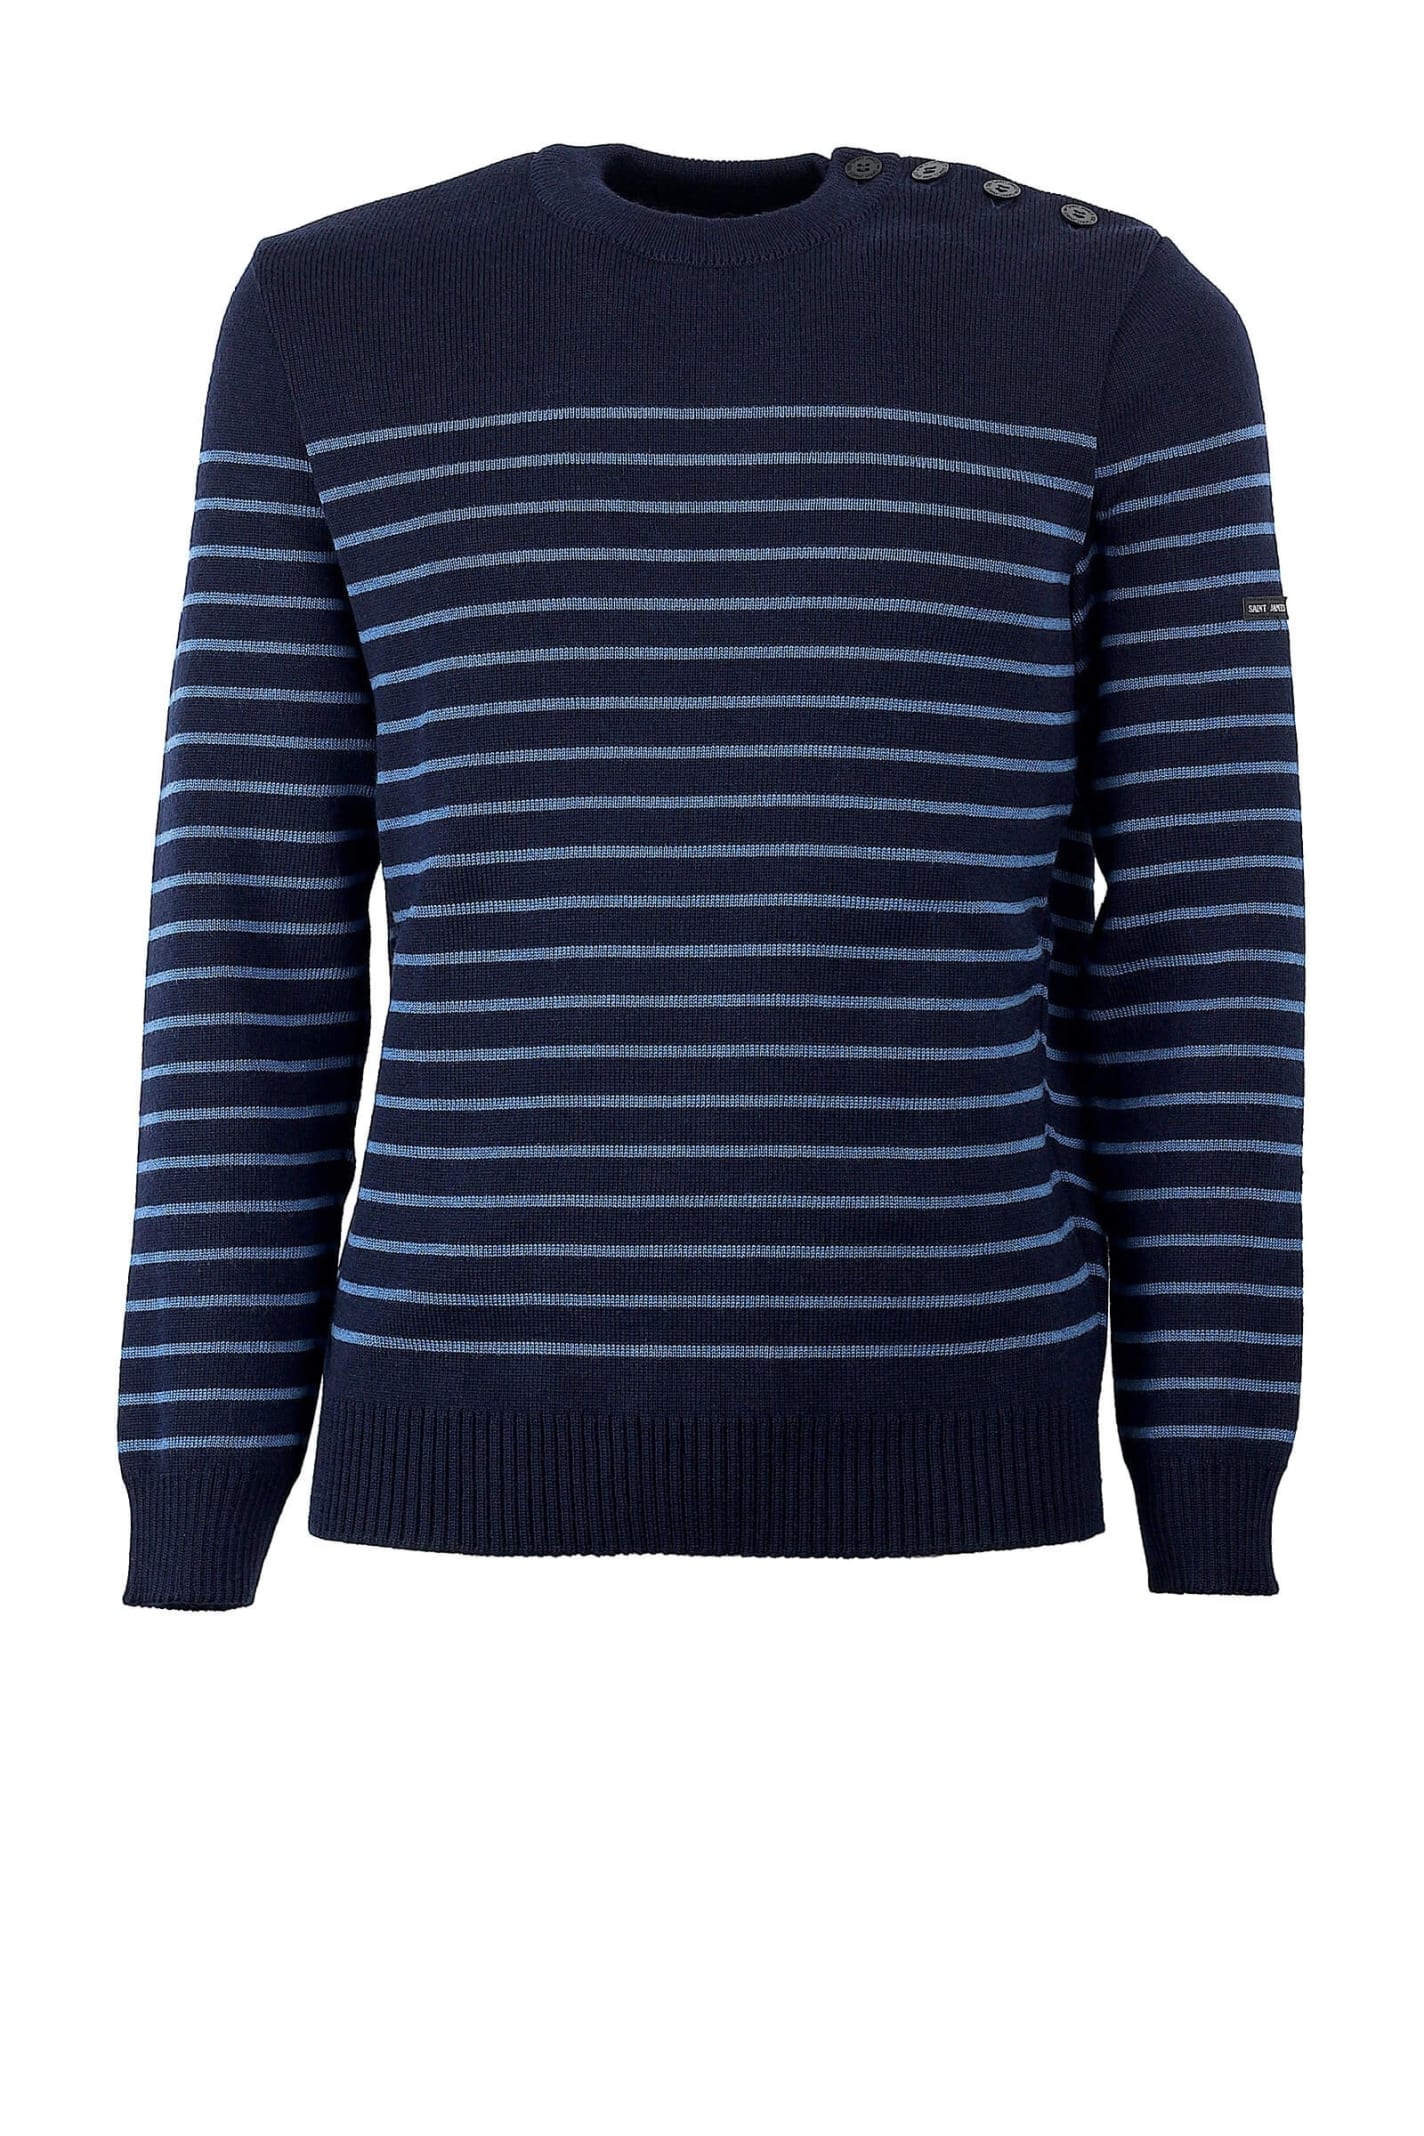 Saint James Binic Navy Blue Sweater